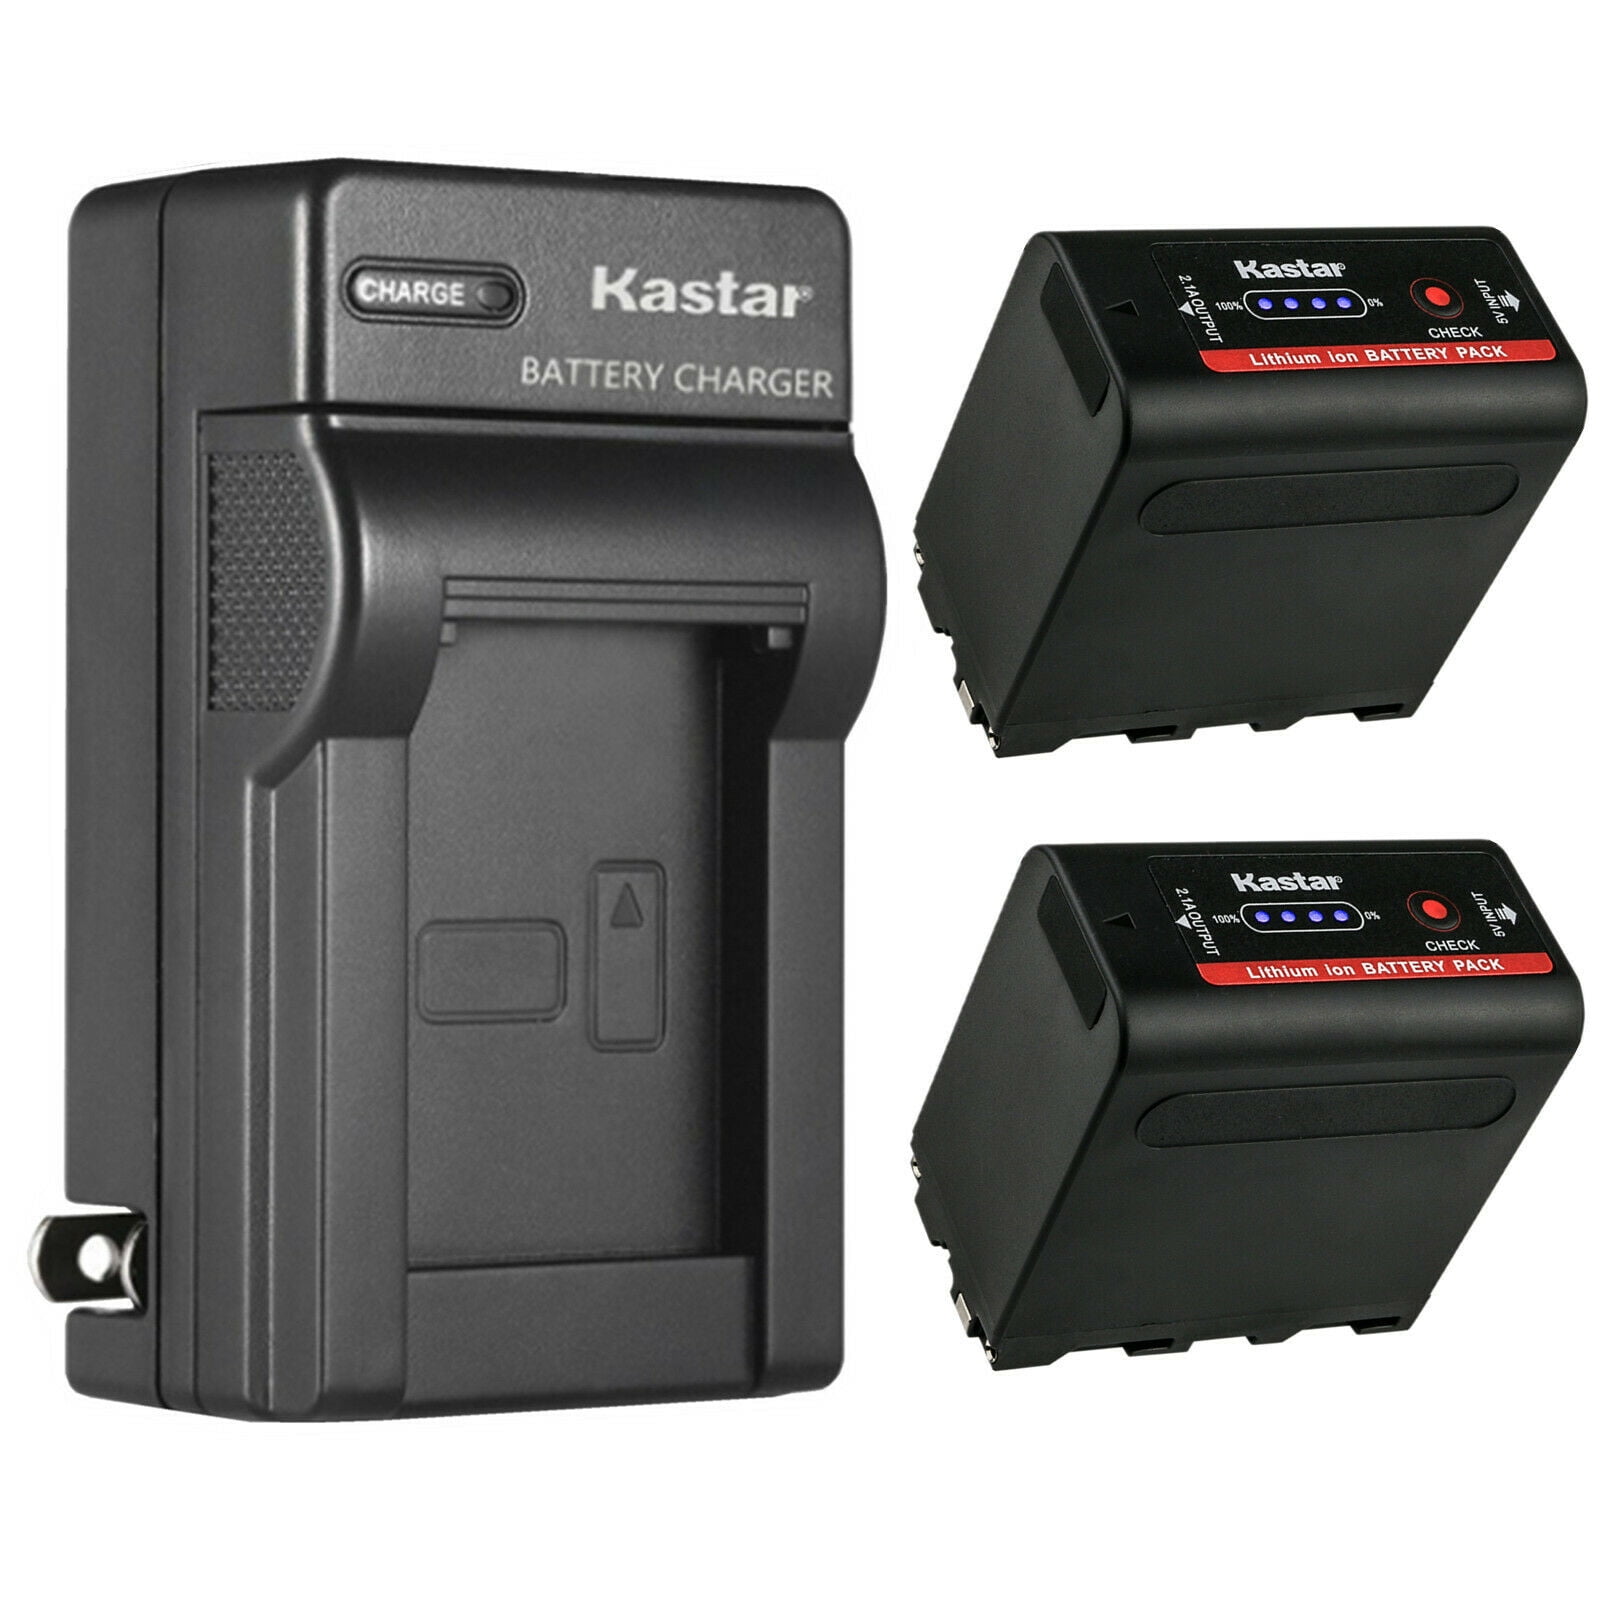 Kastar NP-F980EXP LCD AC Battery Charger Compatible with Sony MVC-CHF81 MVC-CKF81 MVC-FD100 MVC-FD200 MVC-FD5 MVC-FD51 MVC-FD7 MVC-FD71 MVC-FD73 MVC-FD75 MVC-FD81 MVC-FD83